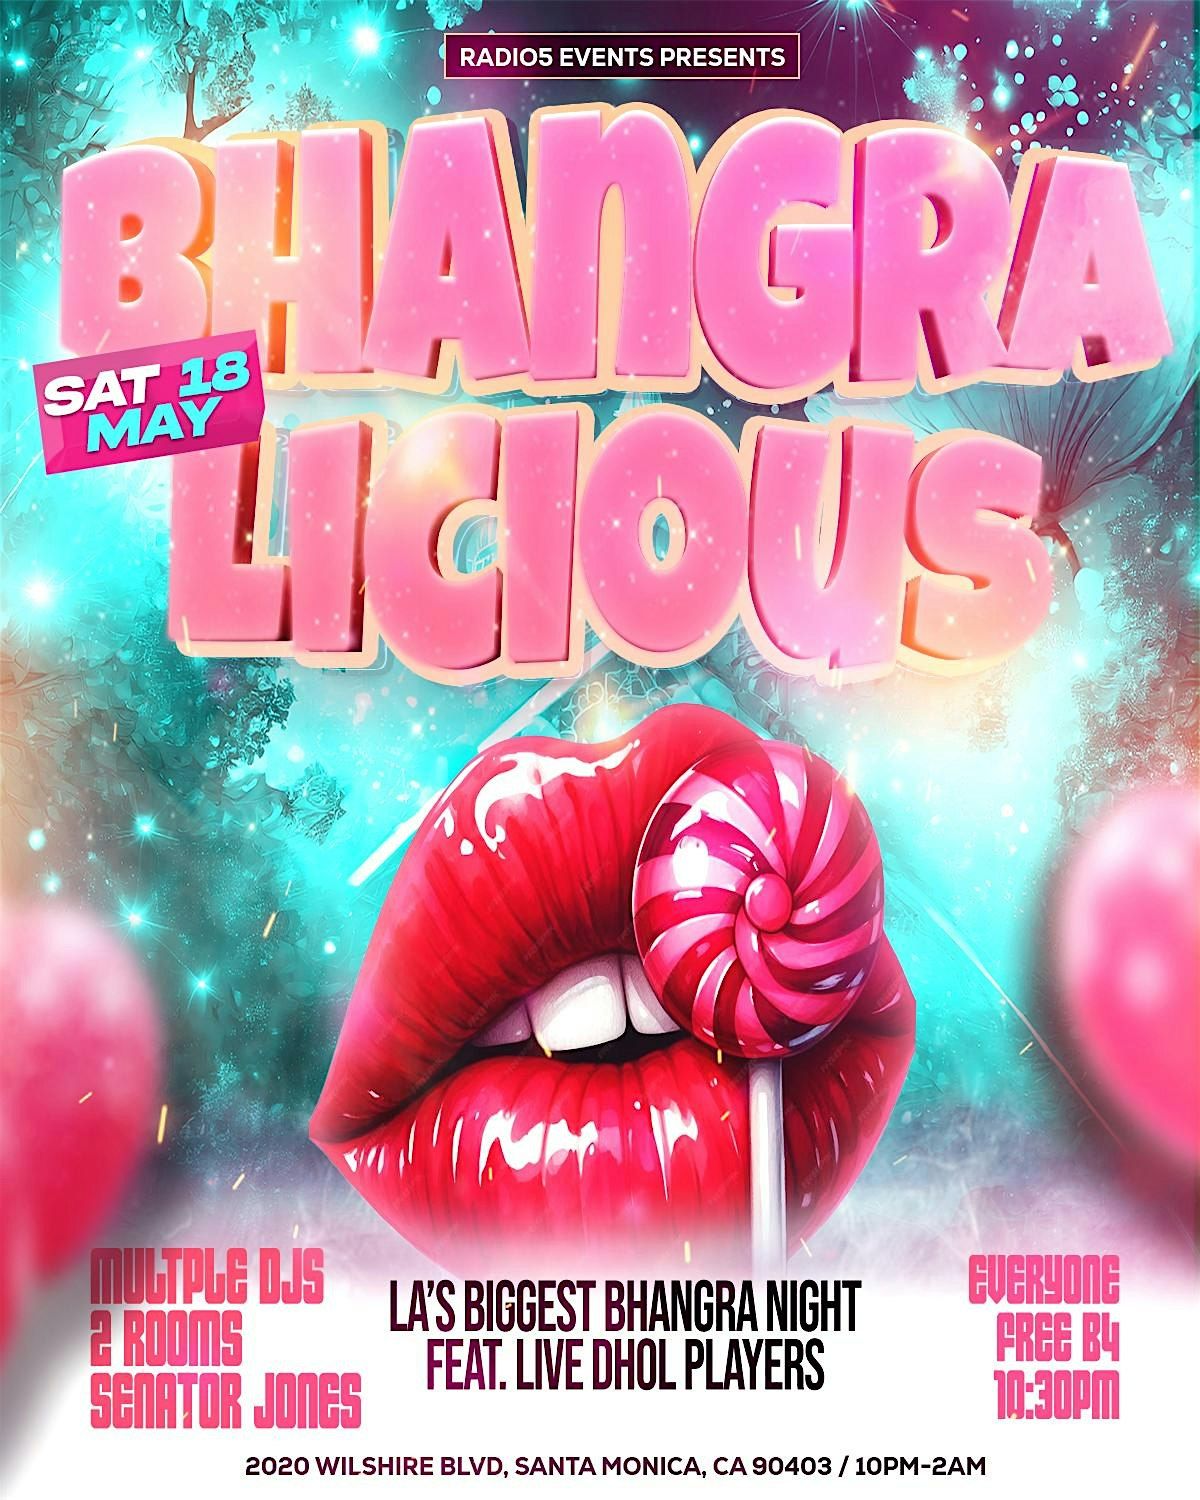 Bhangralicious: LA's Premiere Bhangra Night @ the luxurious Senator Jones